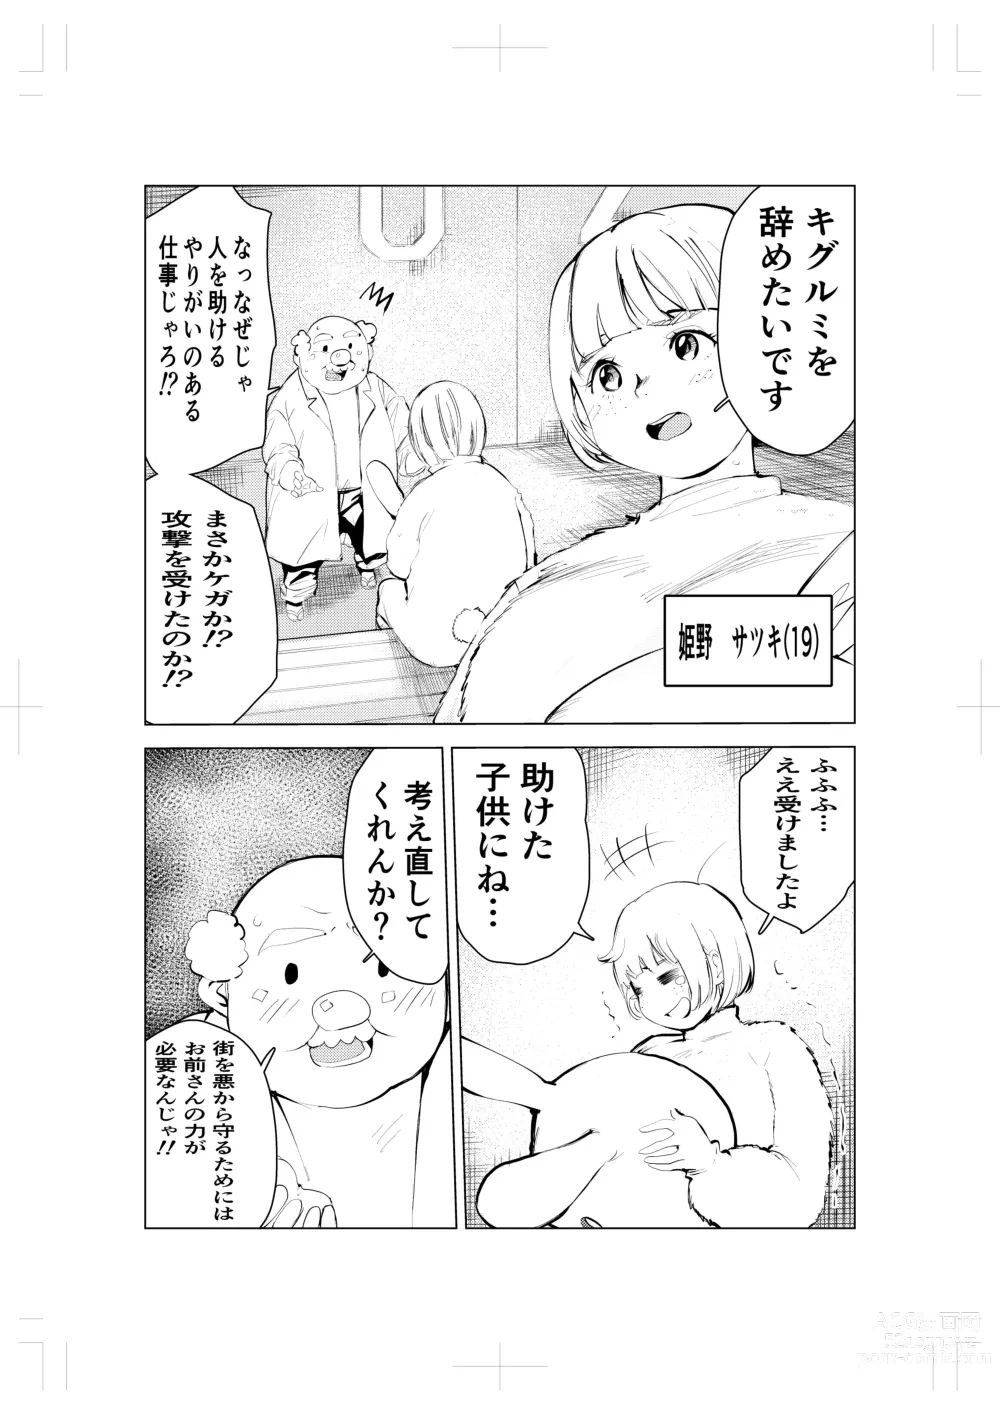 Page 6 of doujinshi Kigurumi niku manjū